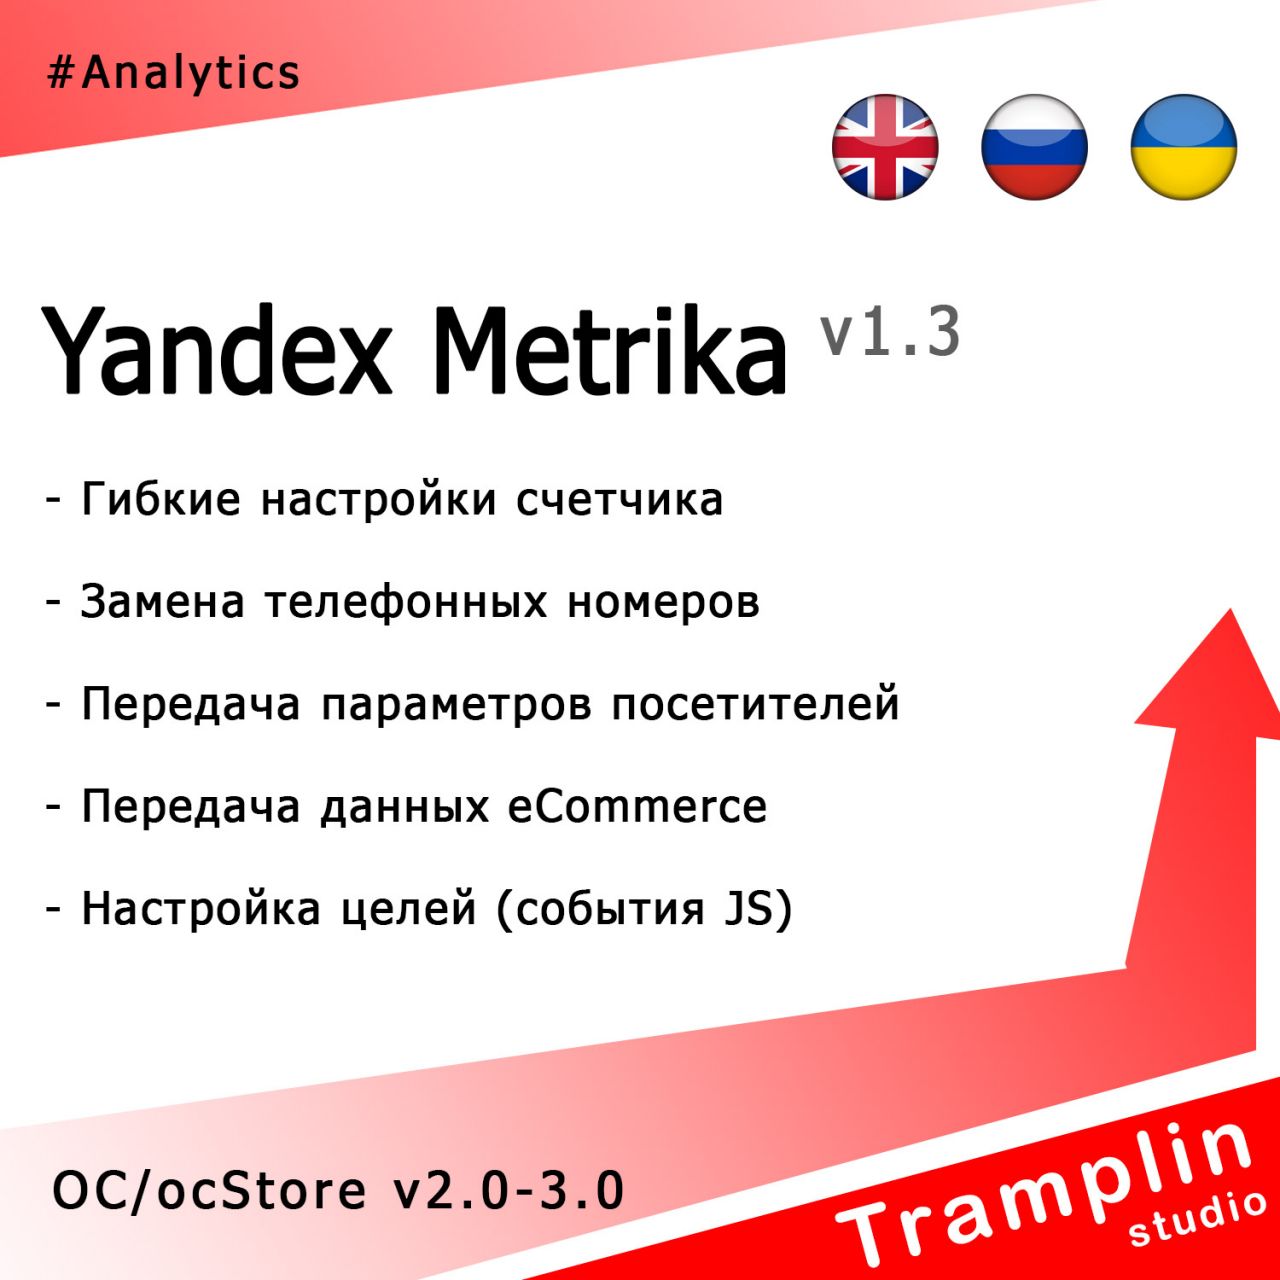 TS Yandex Metrika из категории Обмен данными для CMS OpenCart (ОпенКарт)